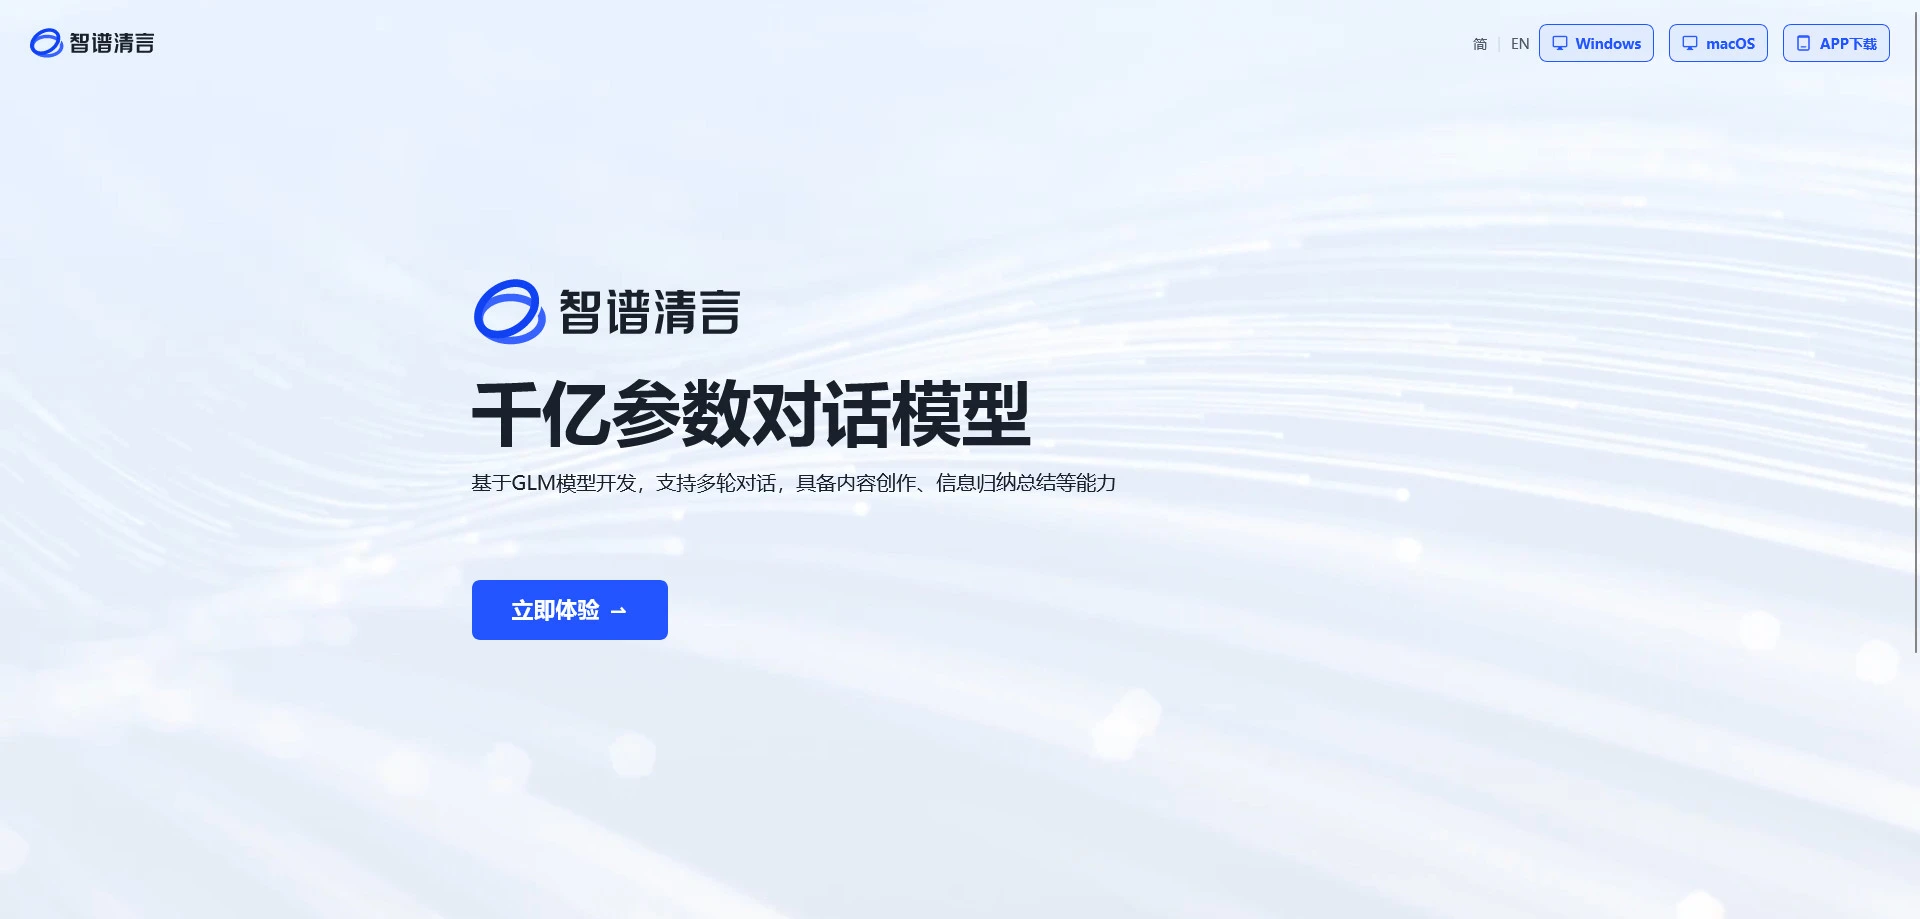 AI工具与服务推荐 - 智谱清言 - 中文对话式语言处理系统 - 特色图片